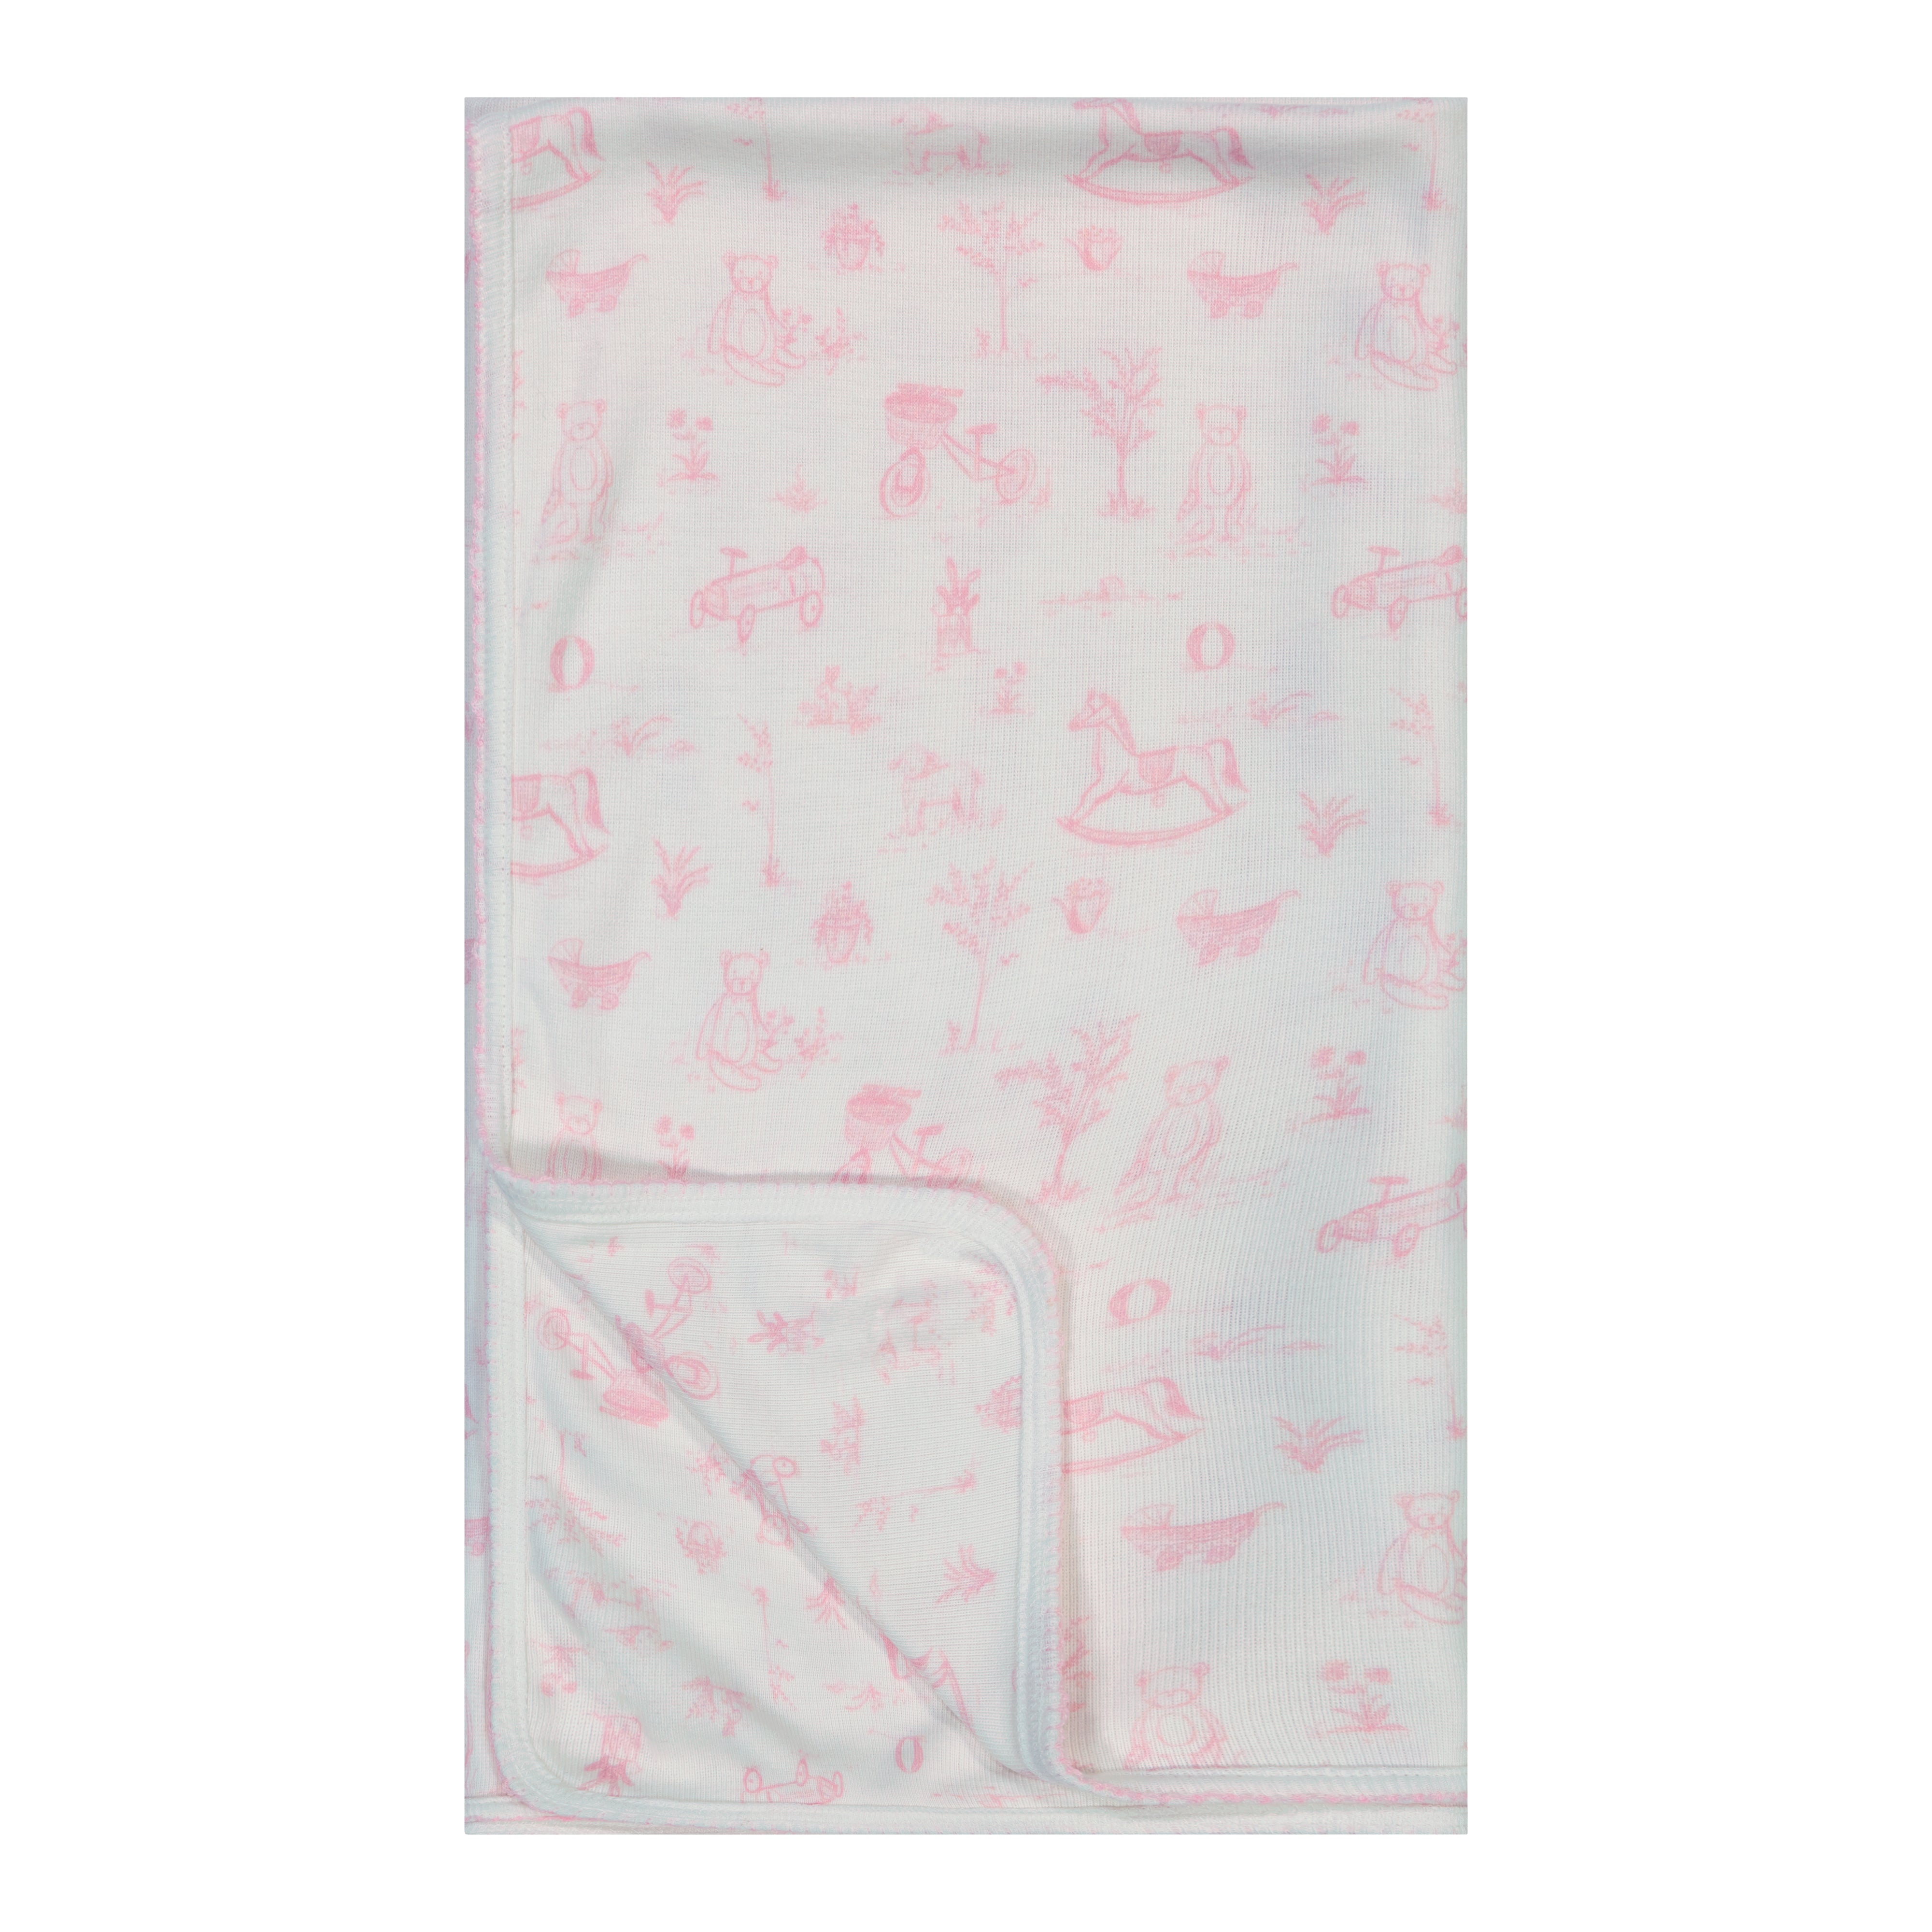 GIRLS BABY BLANKET Pink Toile Print